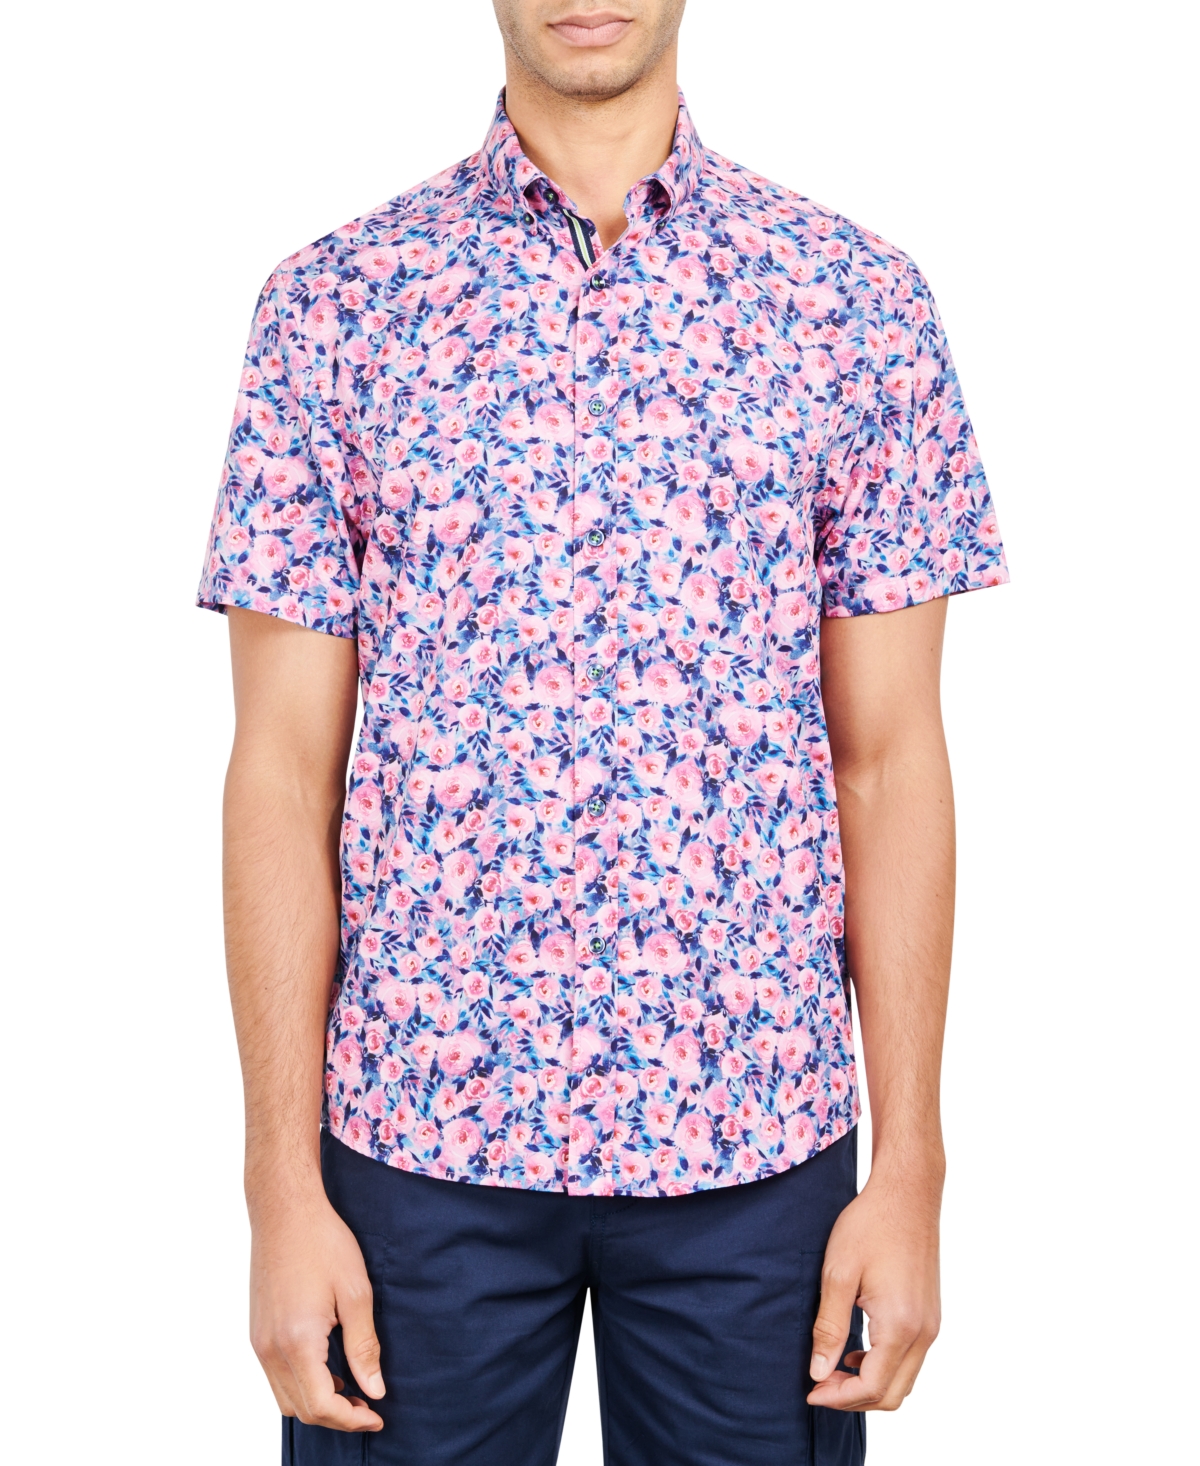 Men's Slim-Fit Performance Stretch Floral Print Short-Sleeve Button-Down Shirt - Pink